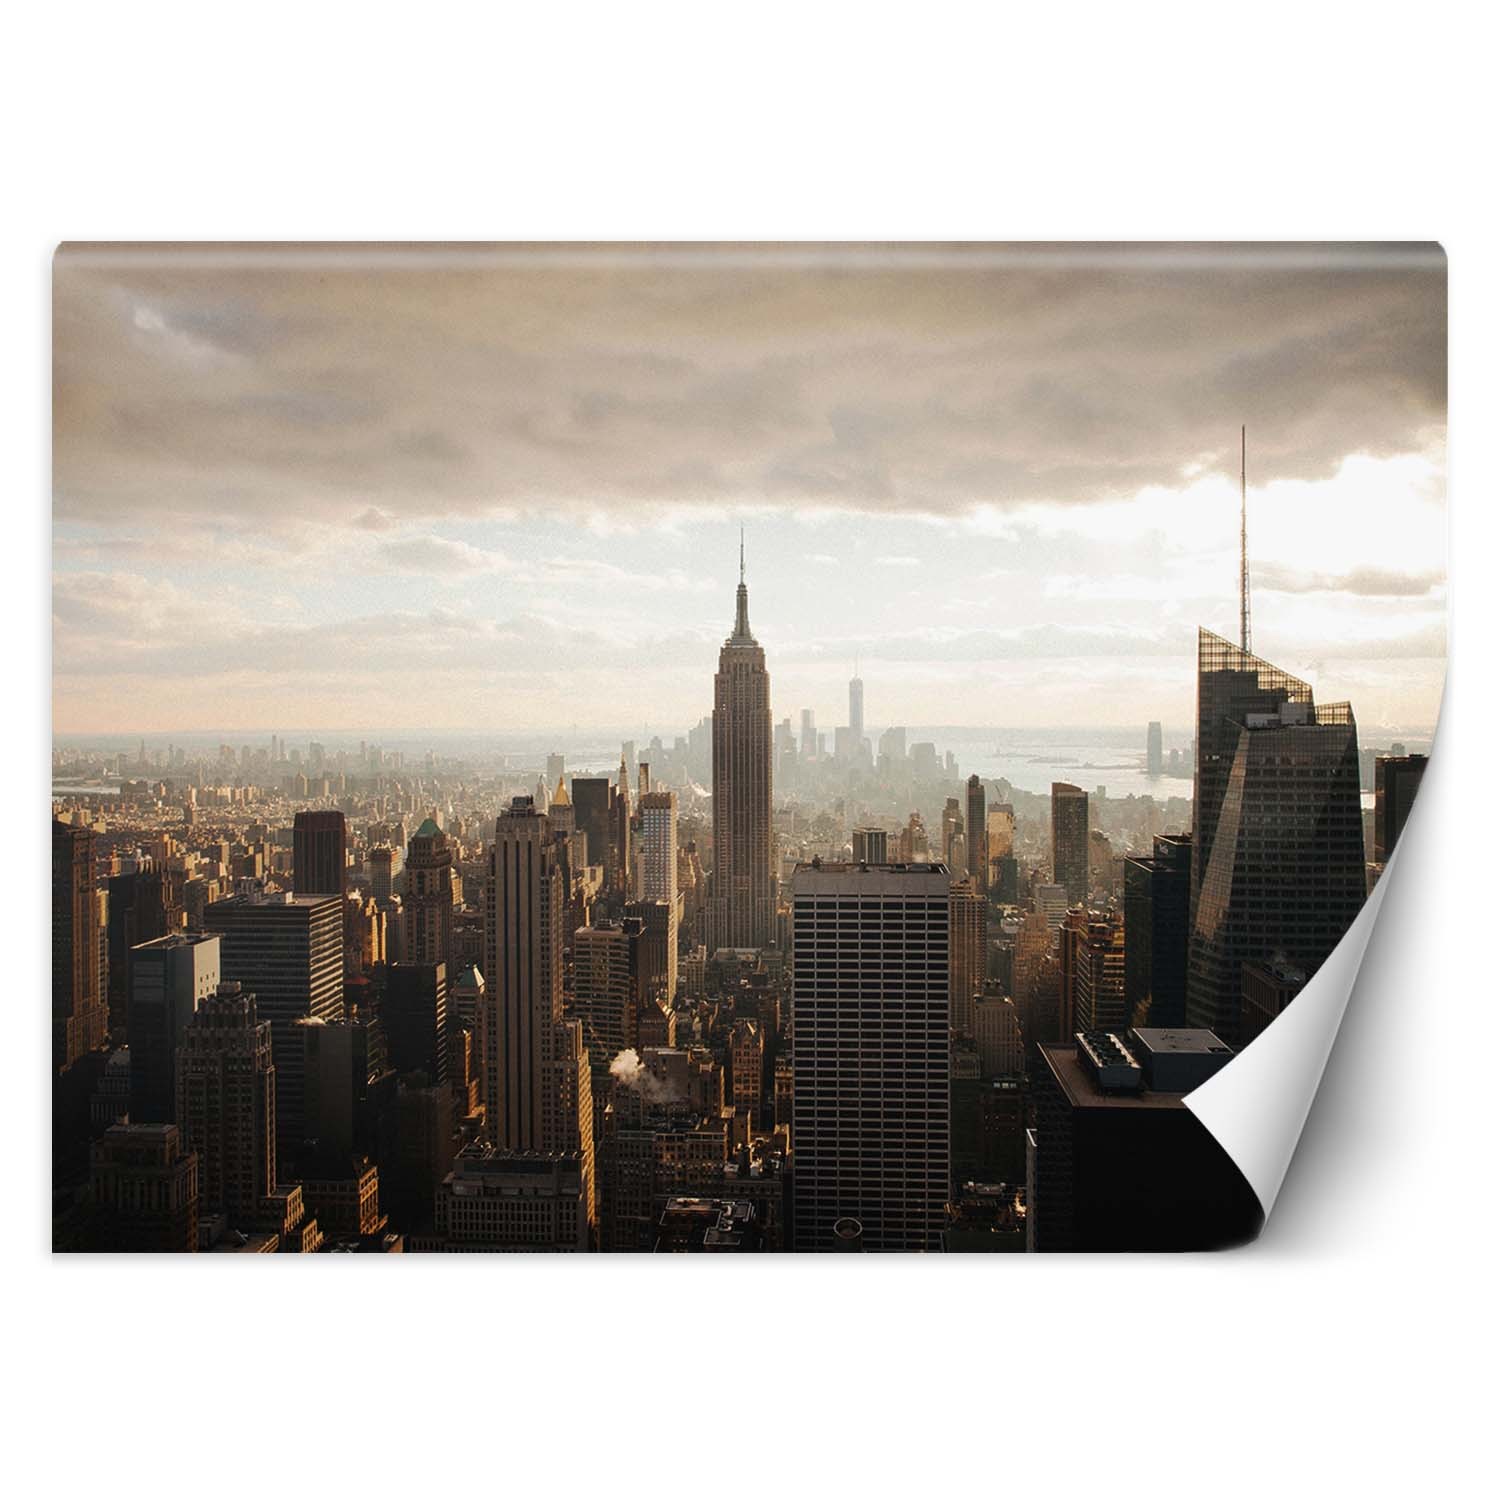 Trend24 – Behang – New York – Manhattan – Behangpapier – Fotobehang – Behang Woonkamer – 250x175x2 cm – Incl. behanglijm